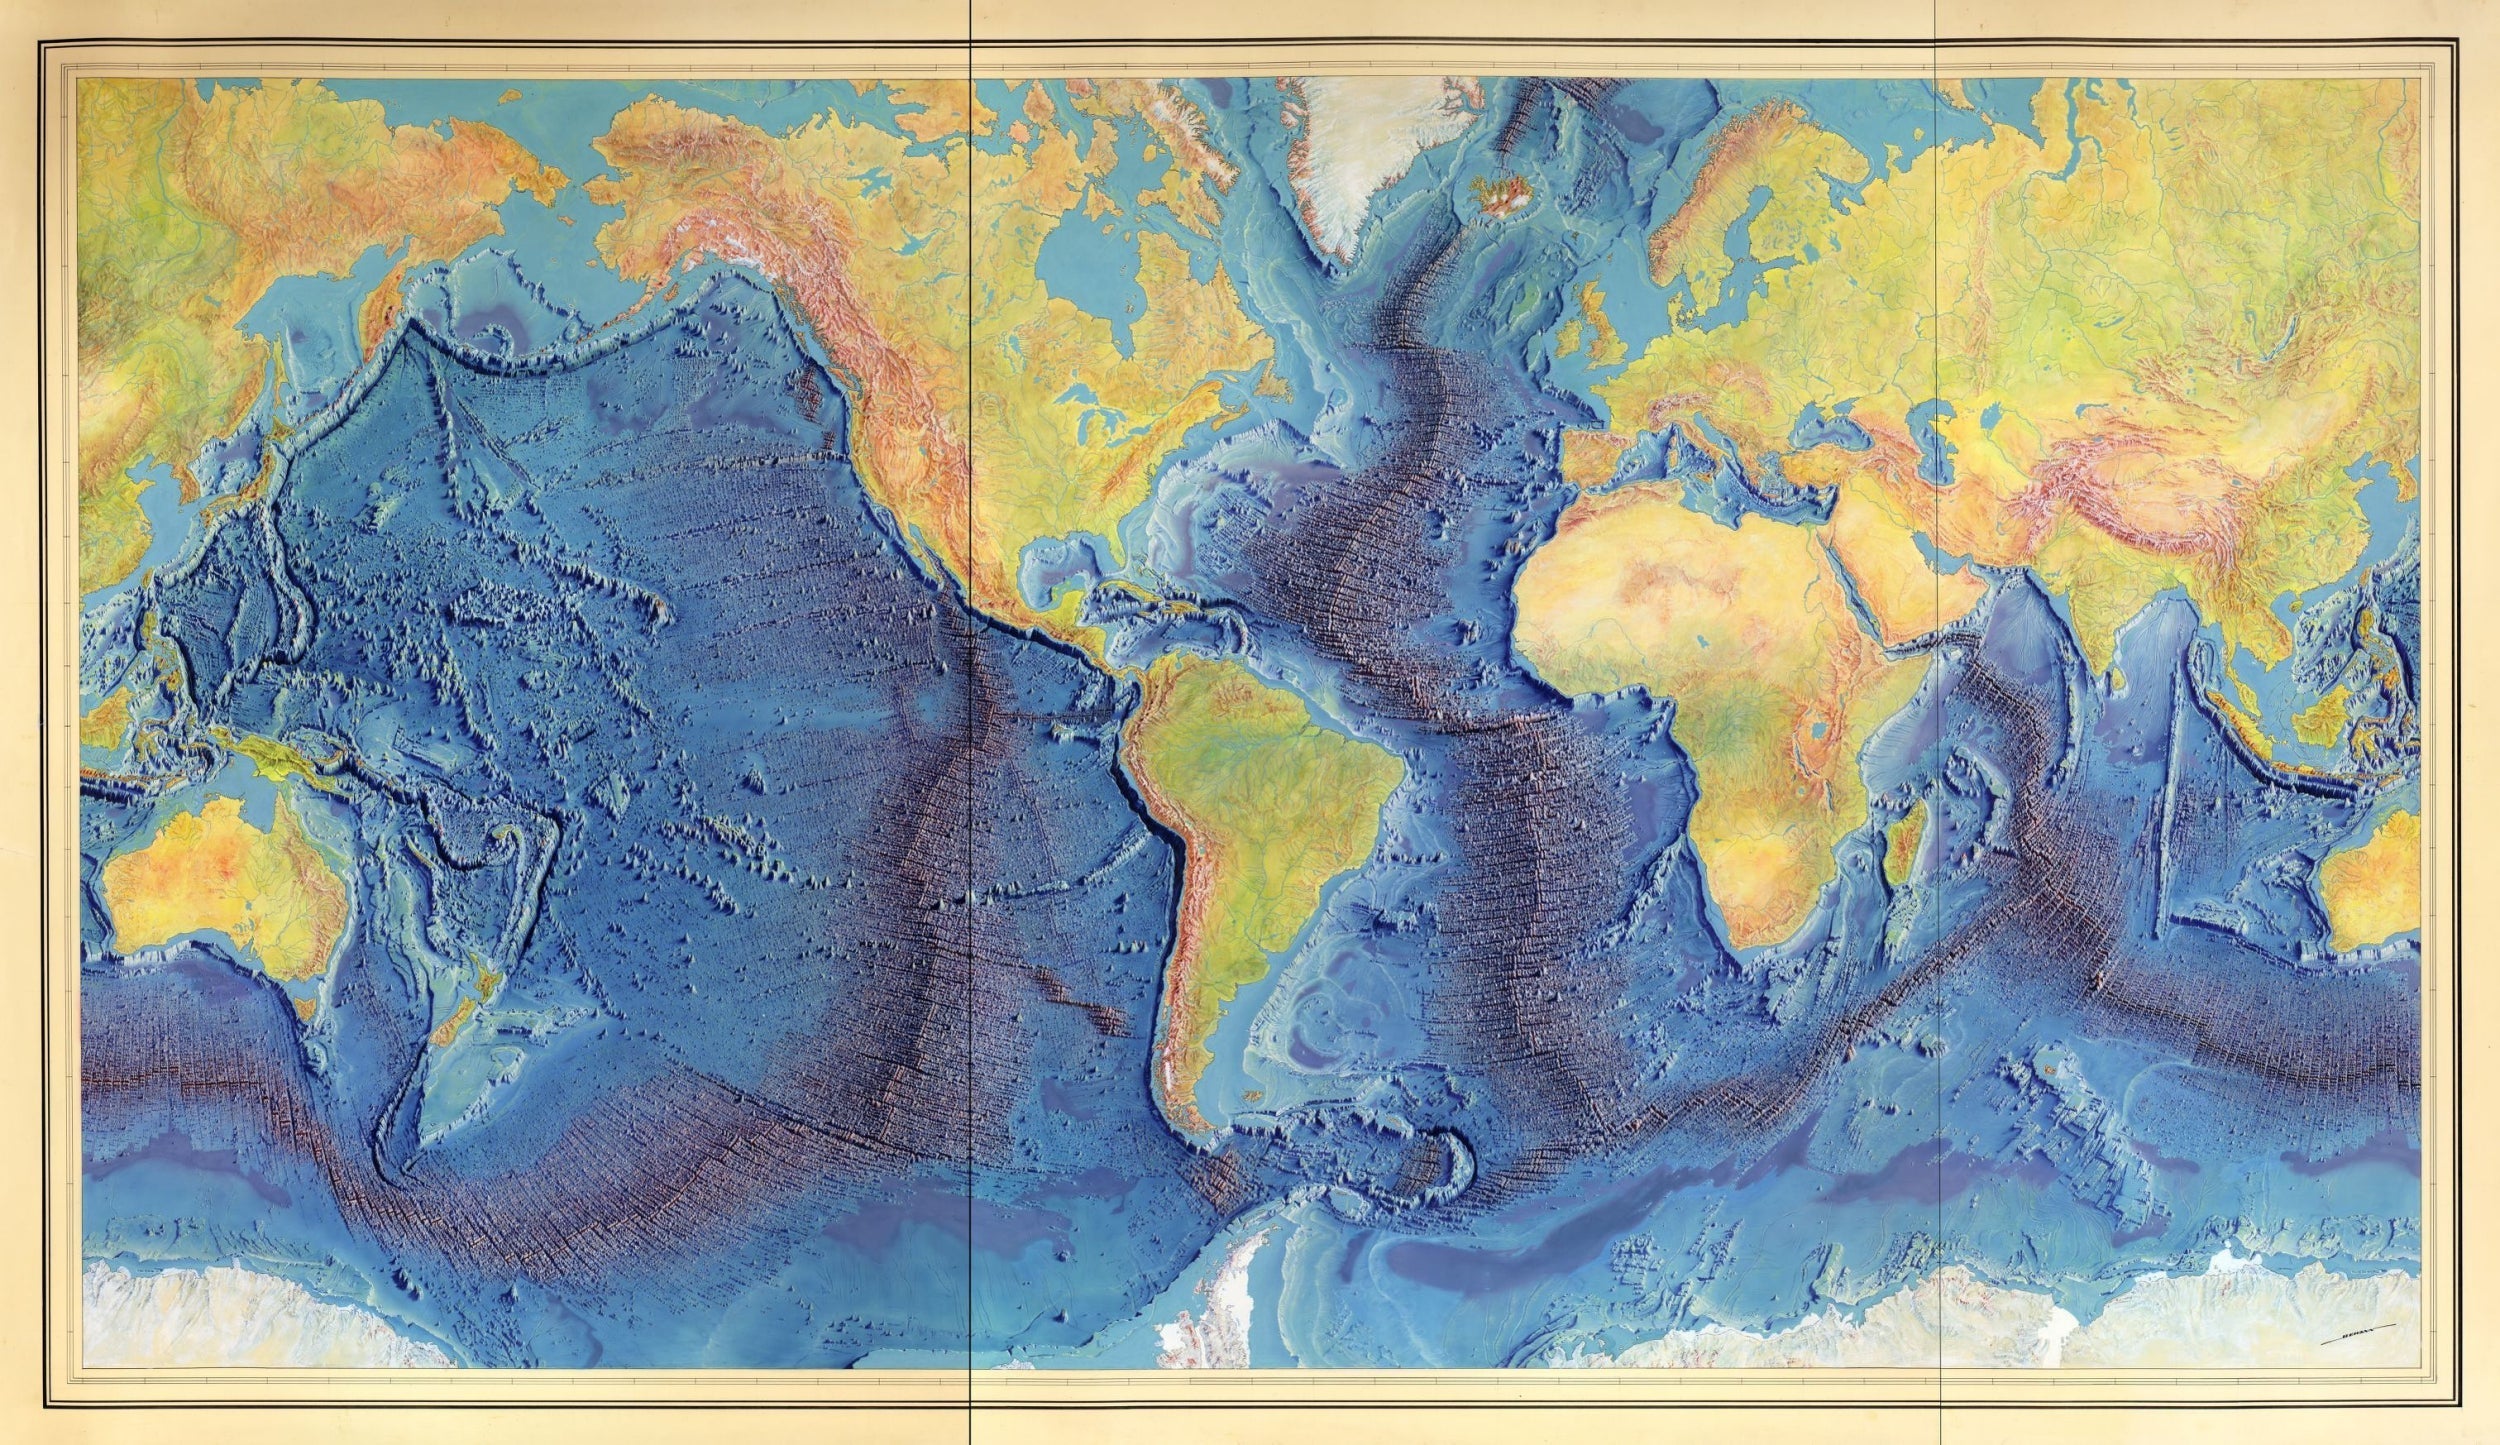 A hand-painted rendition by Heinrich Berann of the Heezen-Tharp 1977 world ocean floor map